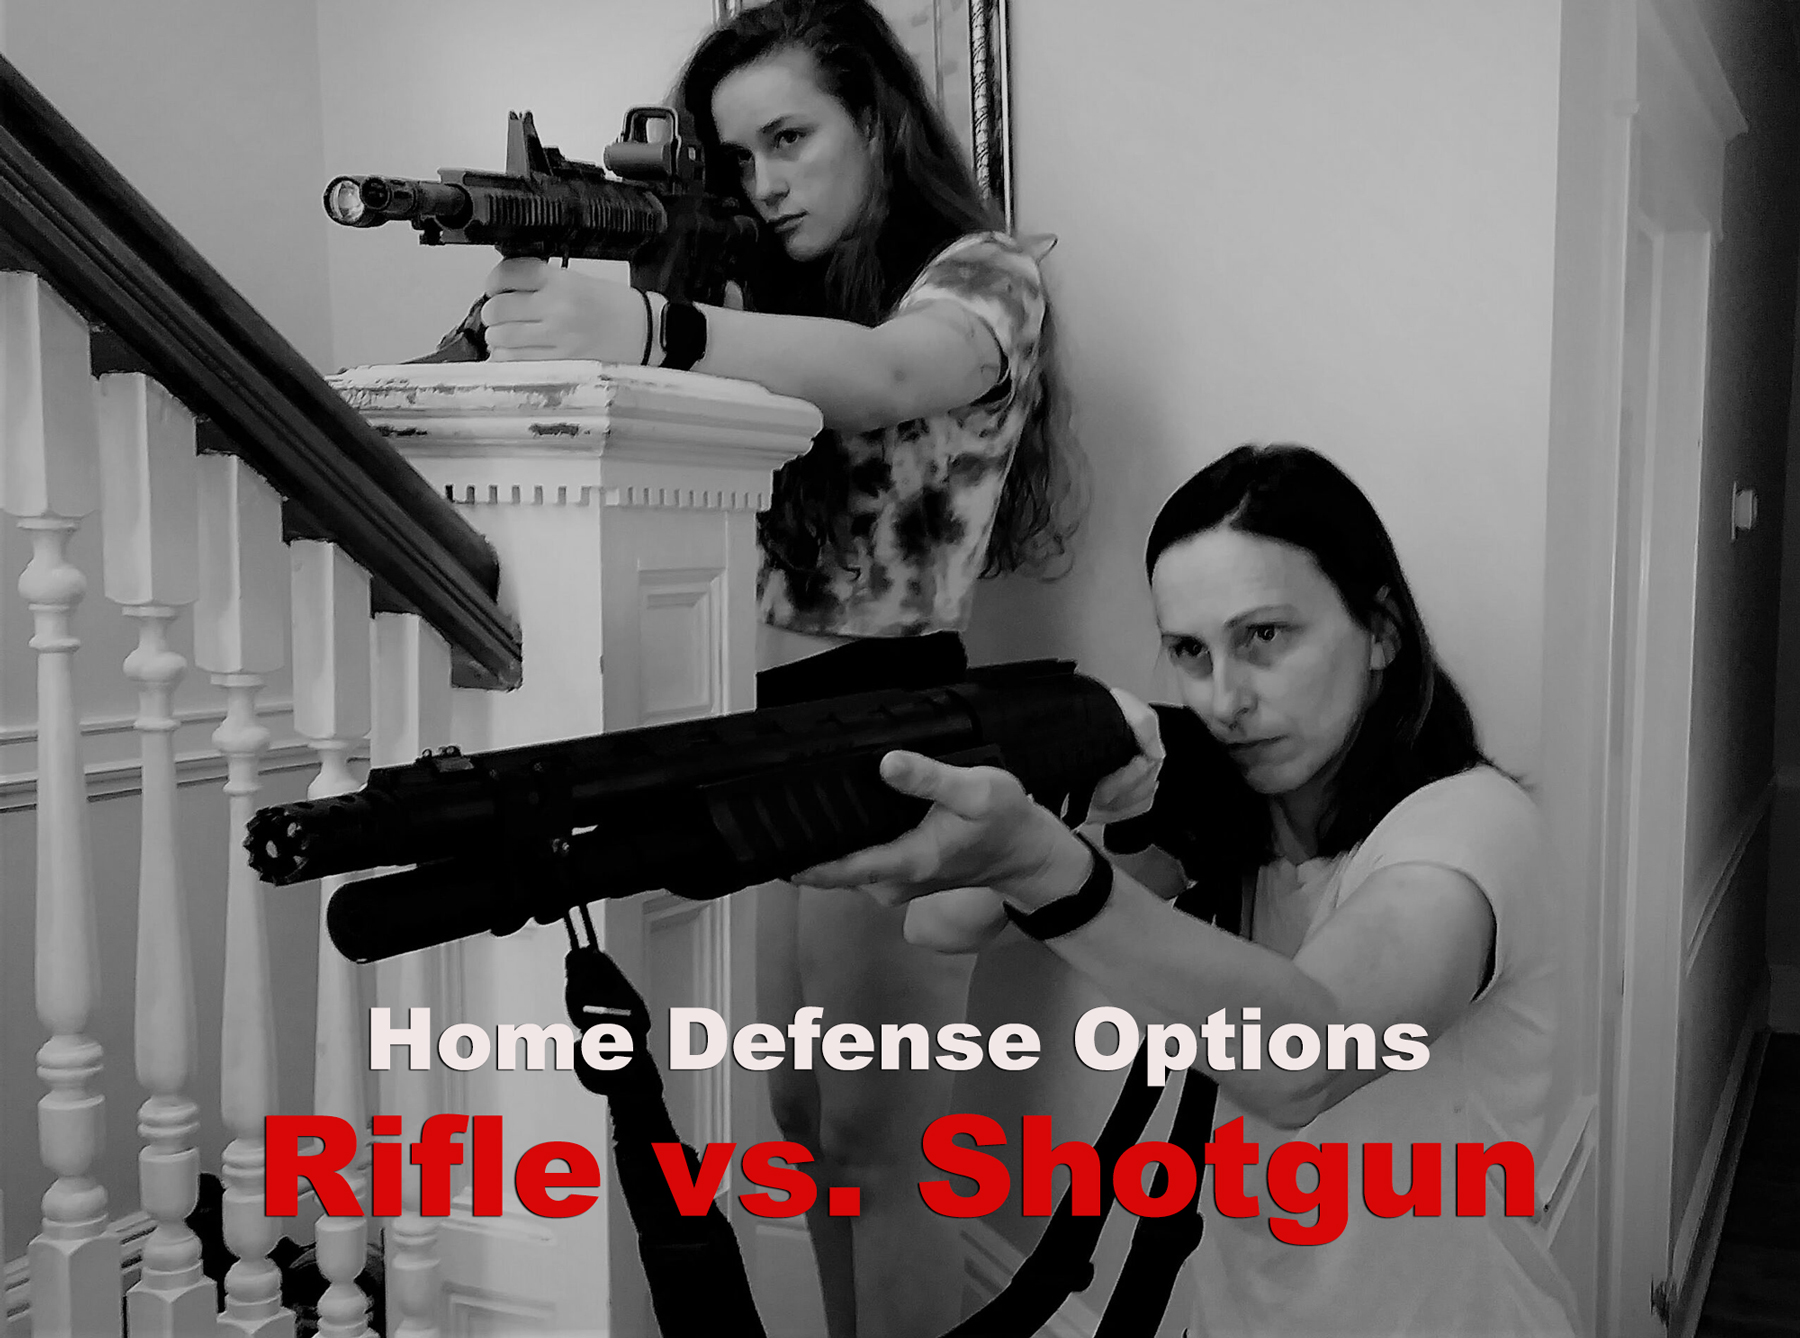 two women holding a rifle vs shotgun inside a home